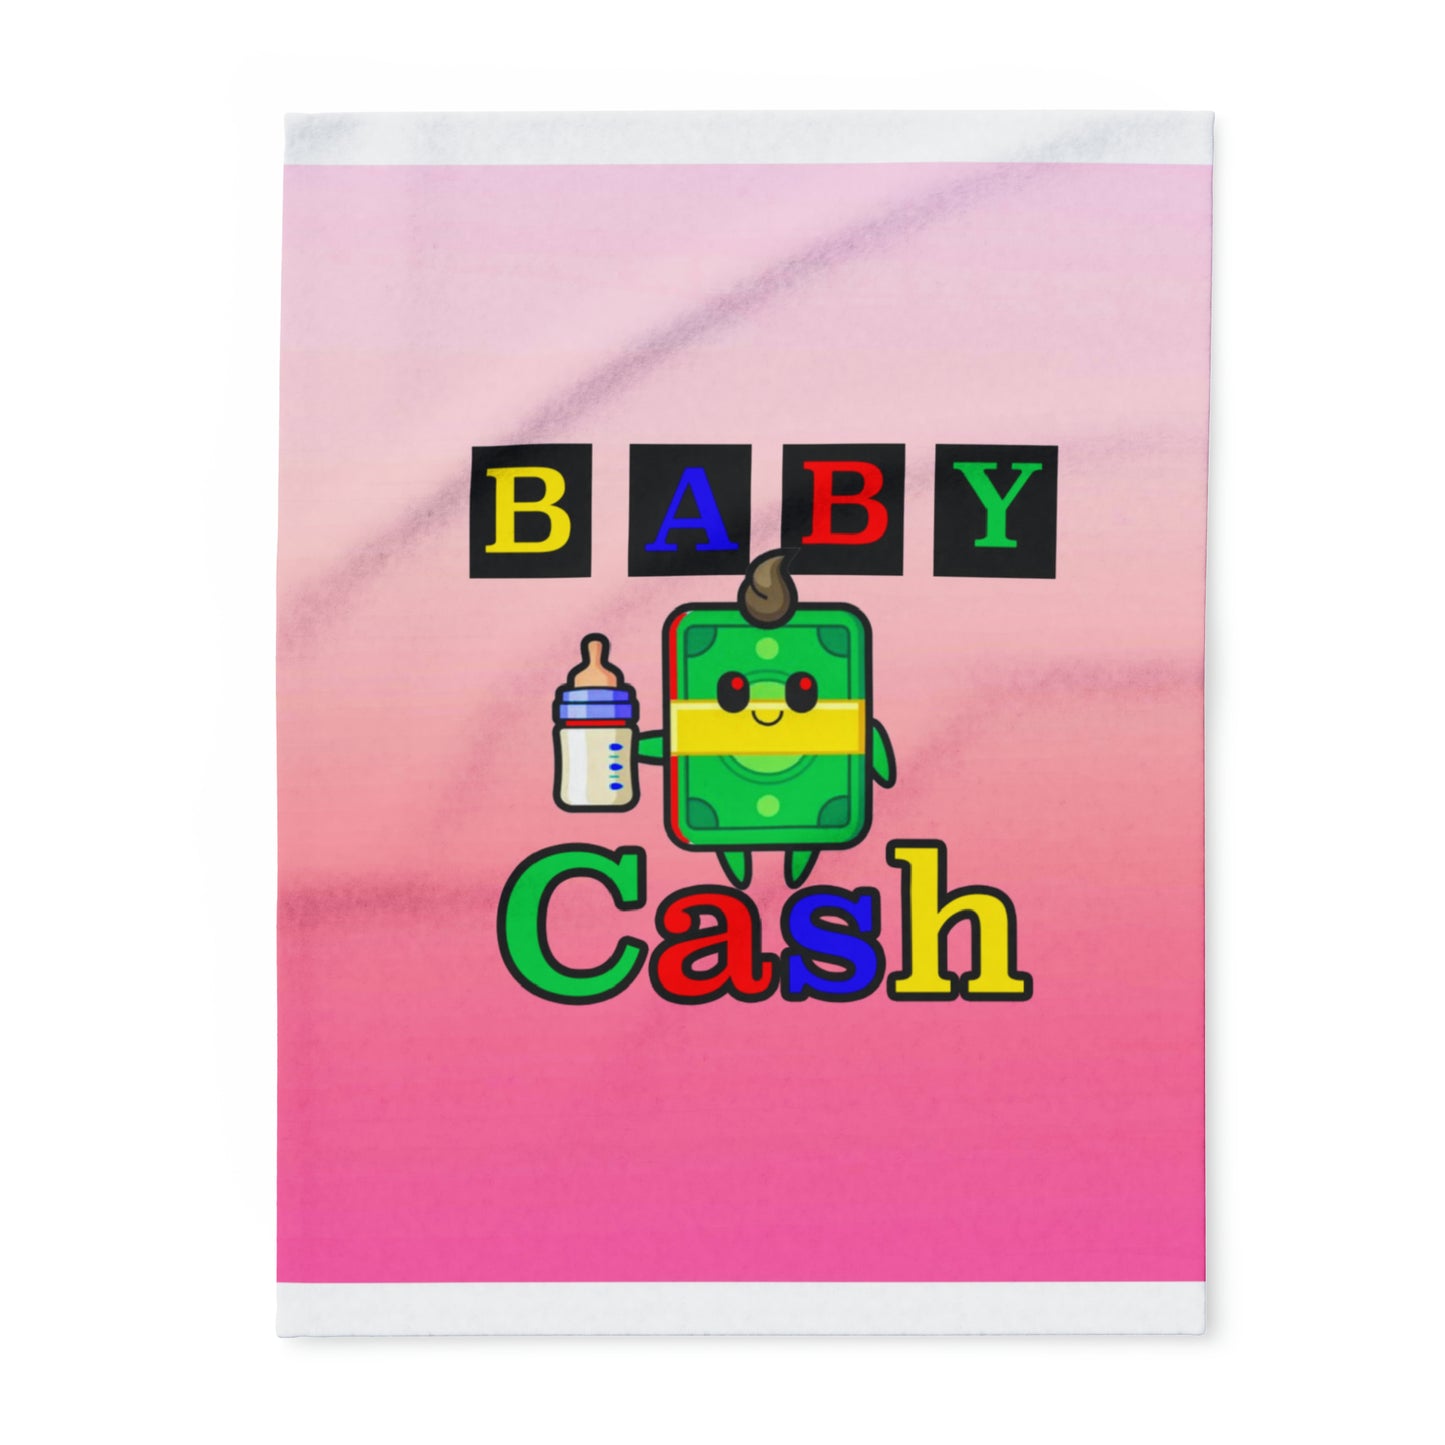 Baby cash